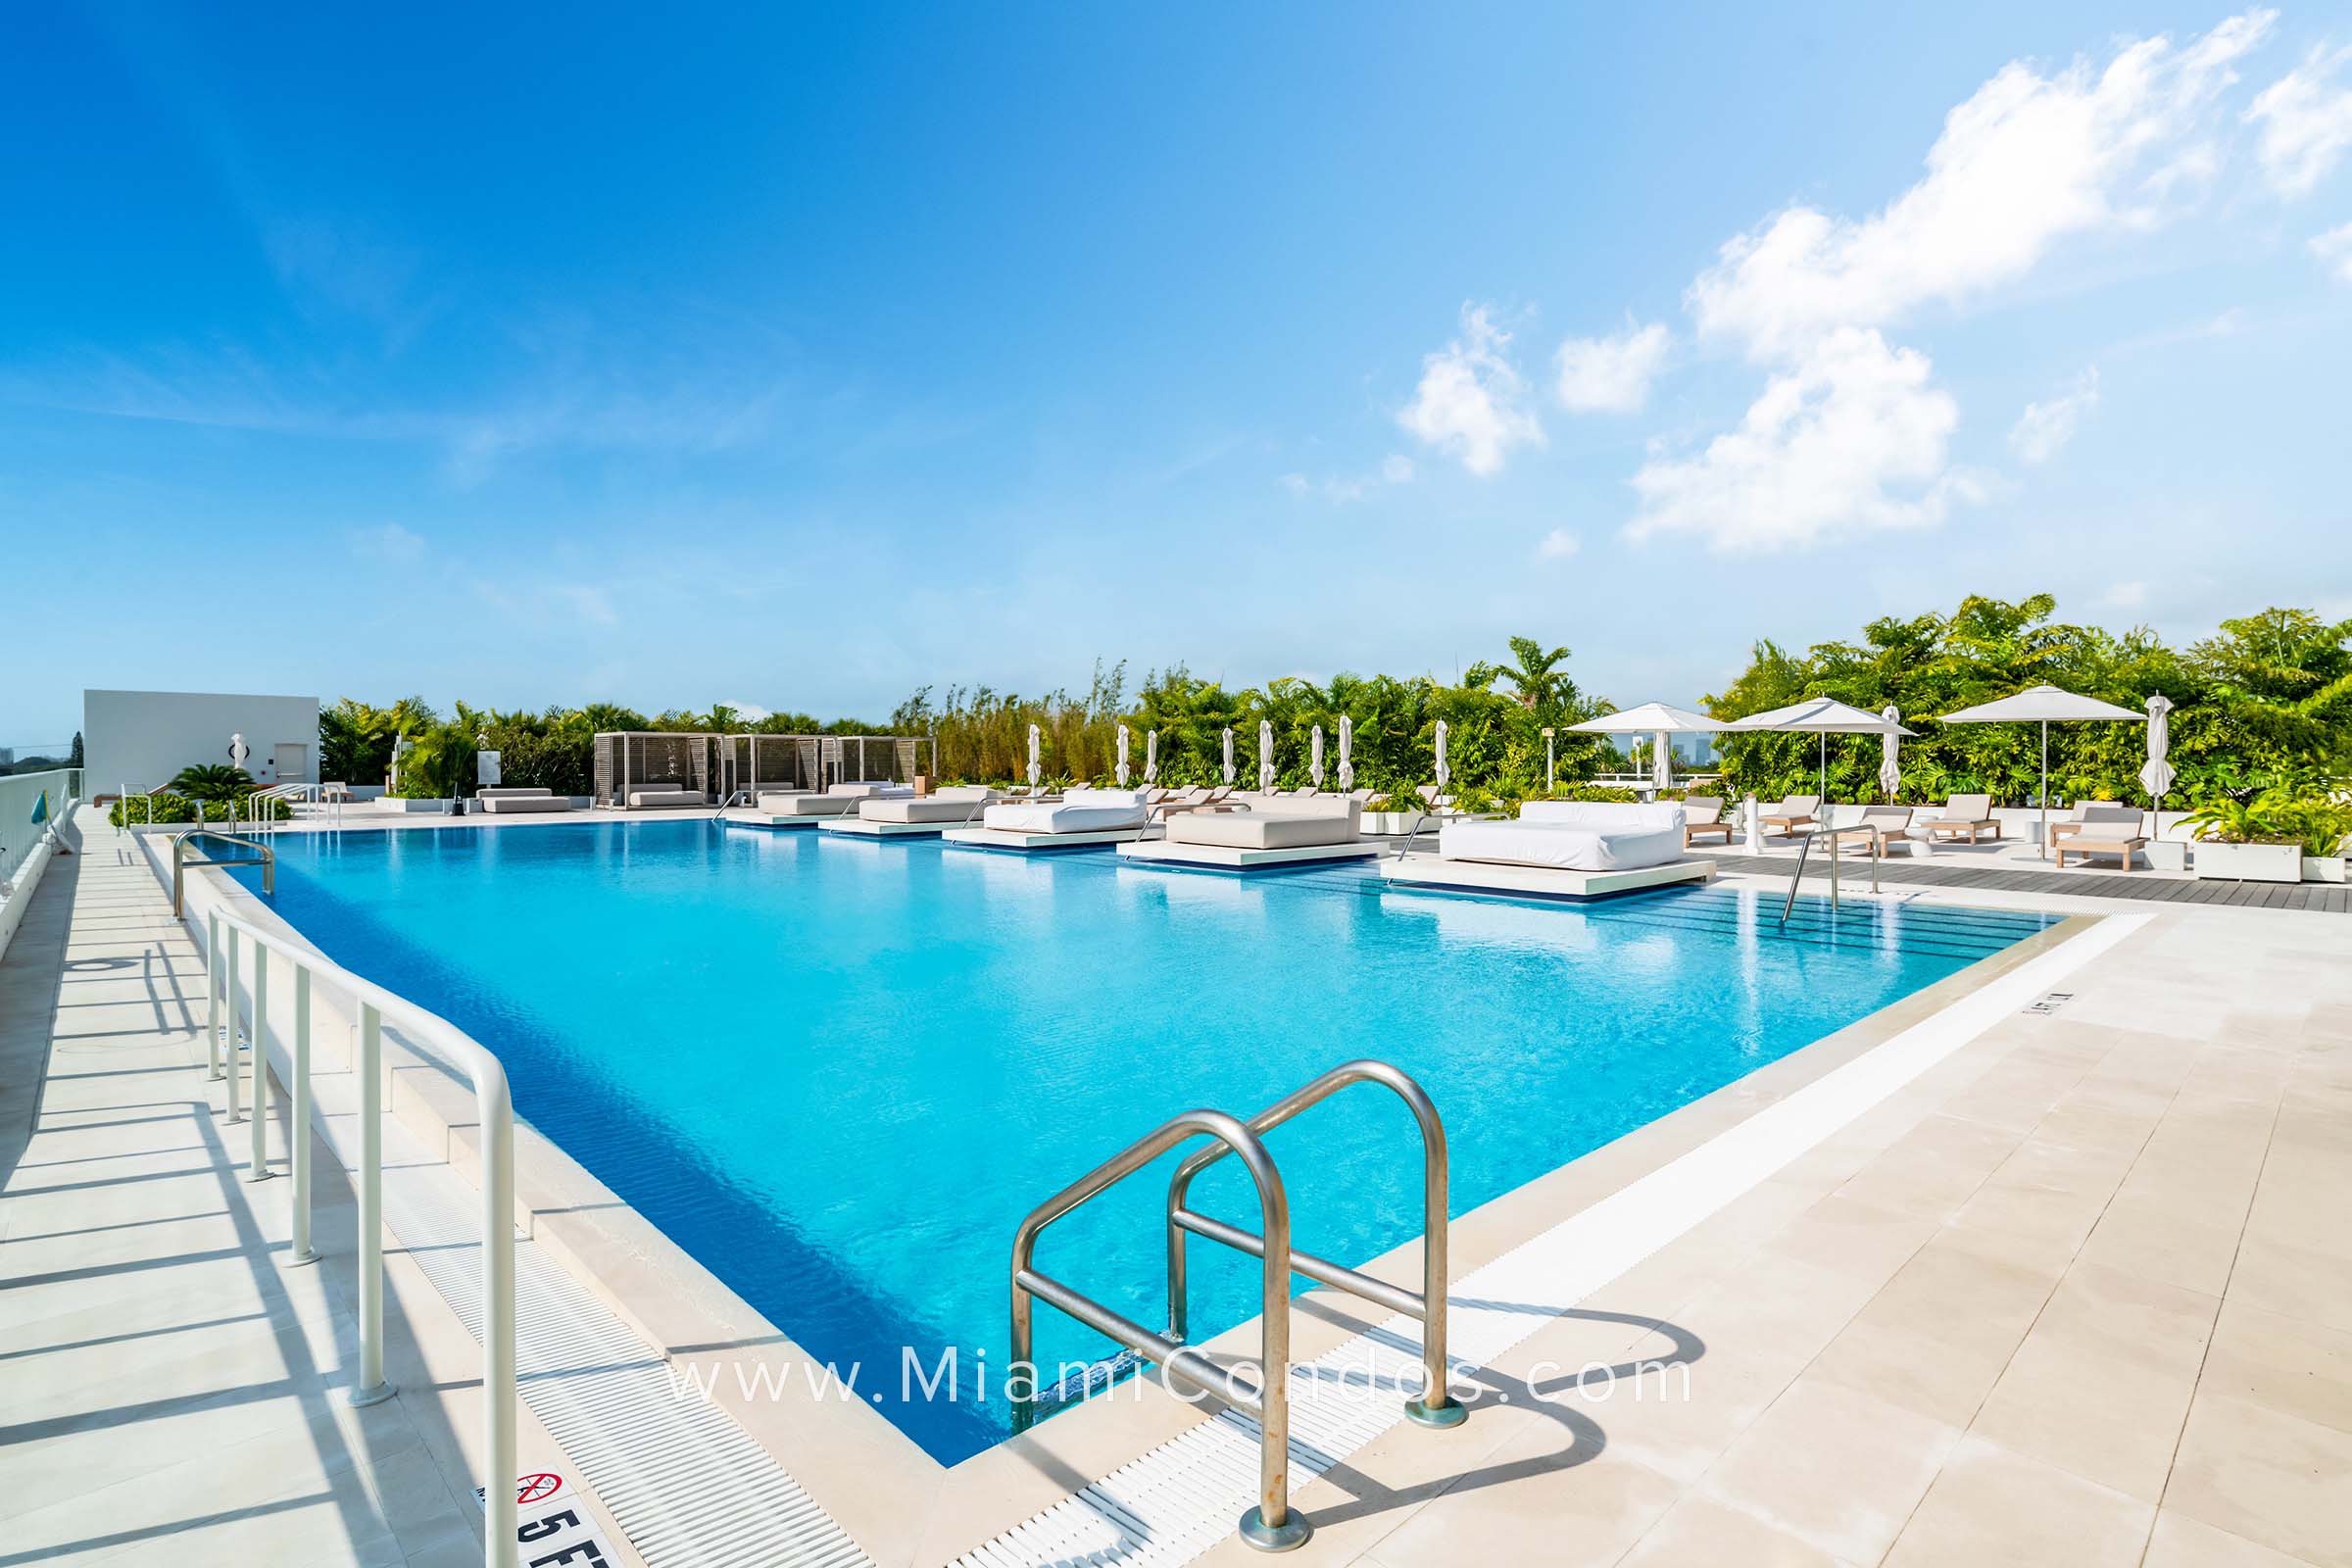 Ritz-Carlton Residences Pool and Cabanas